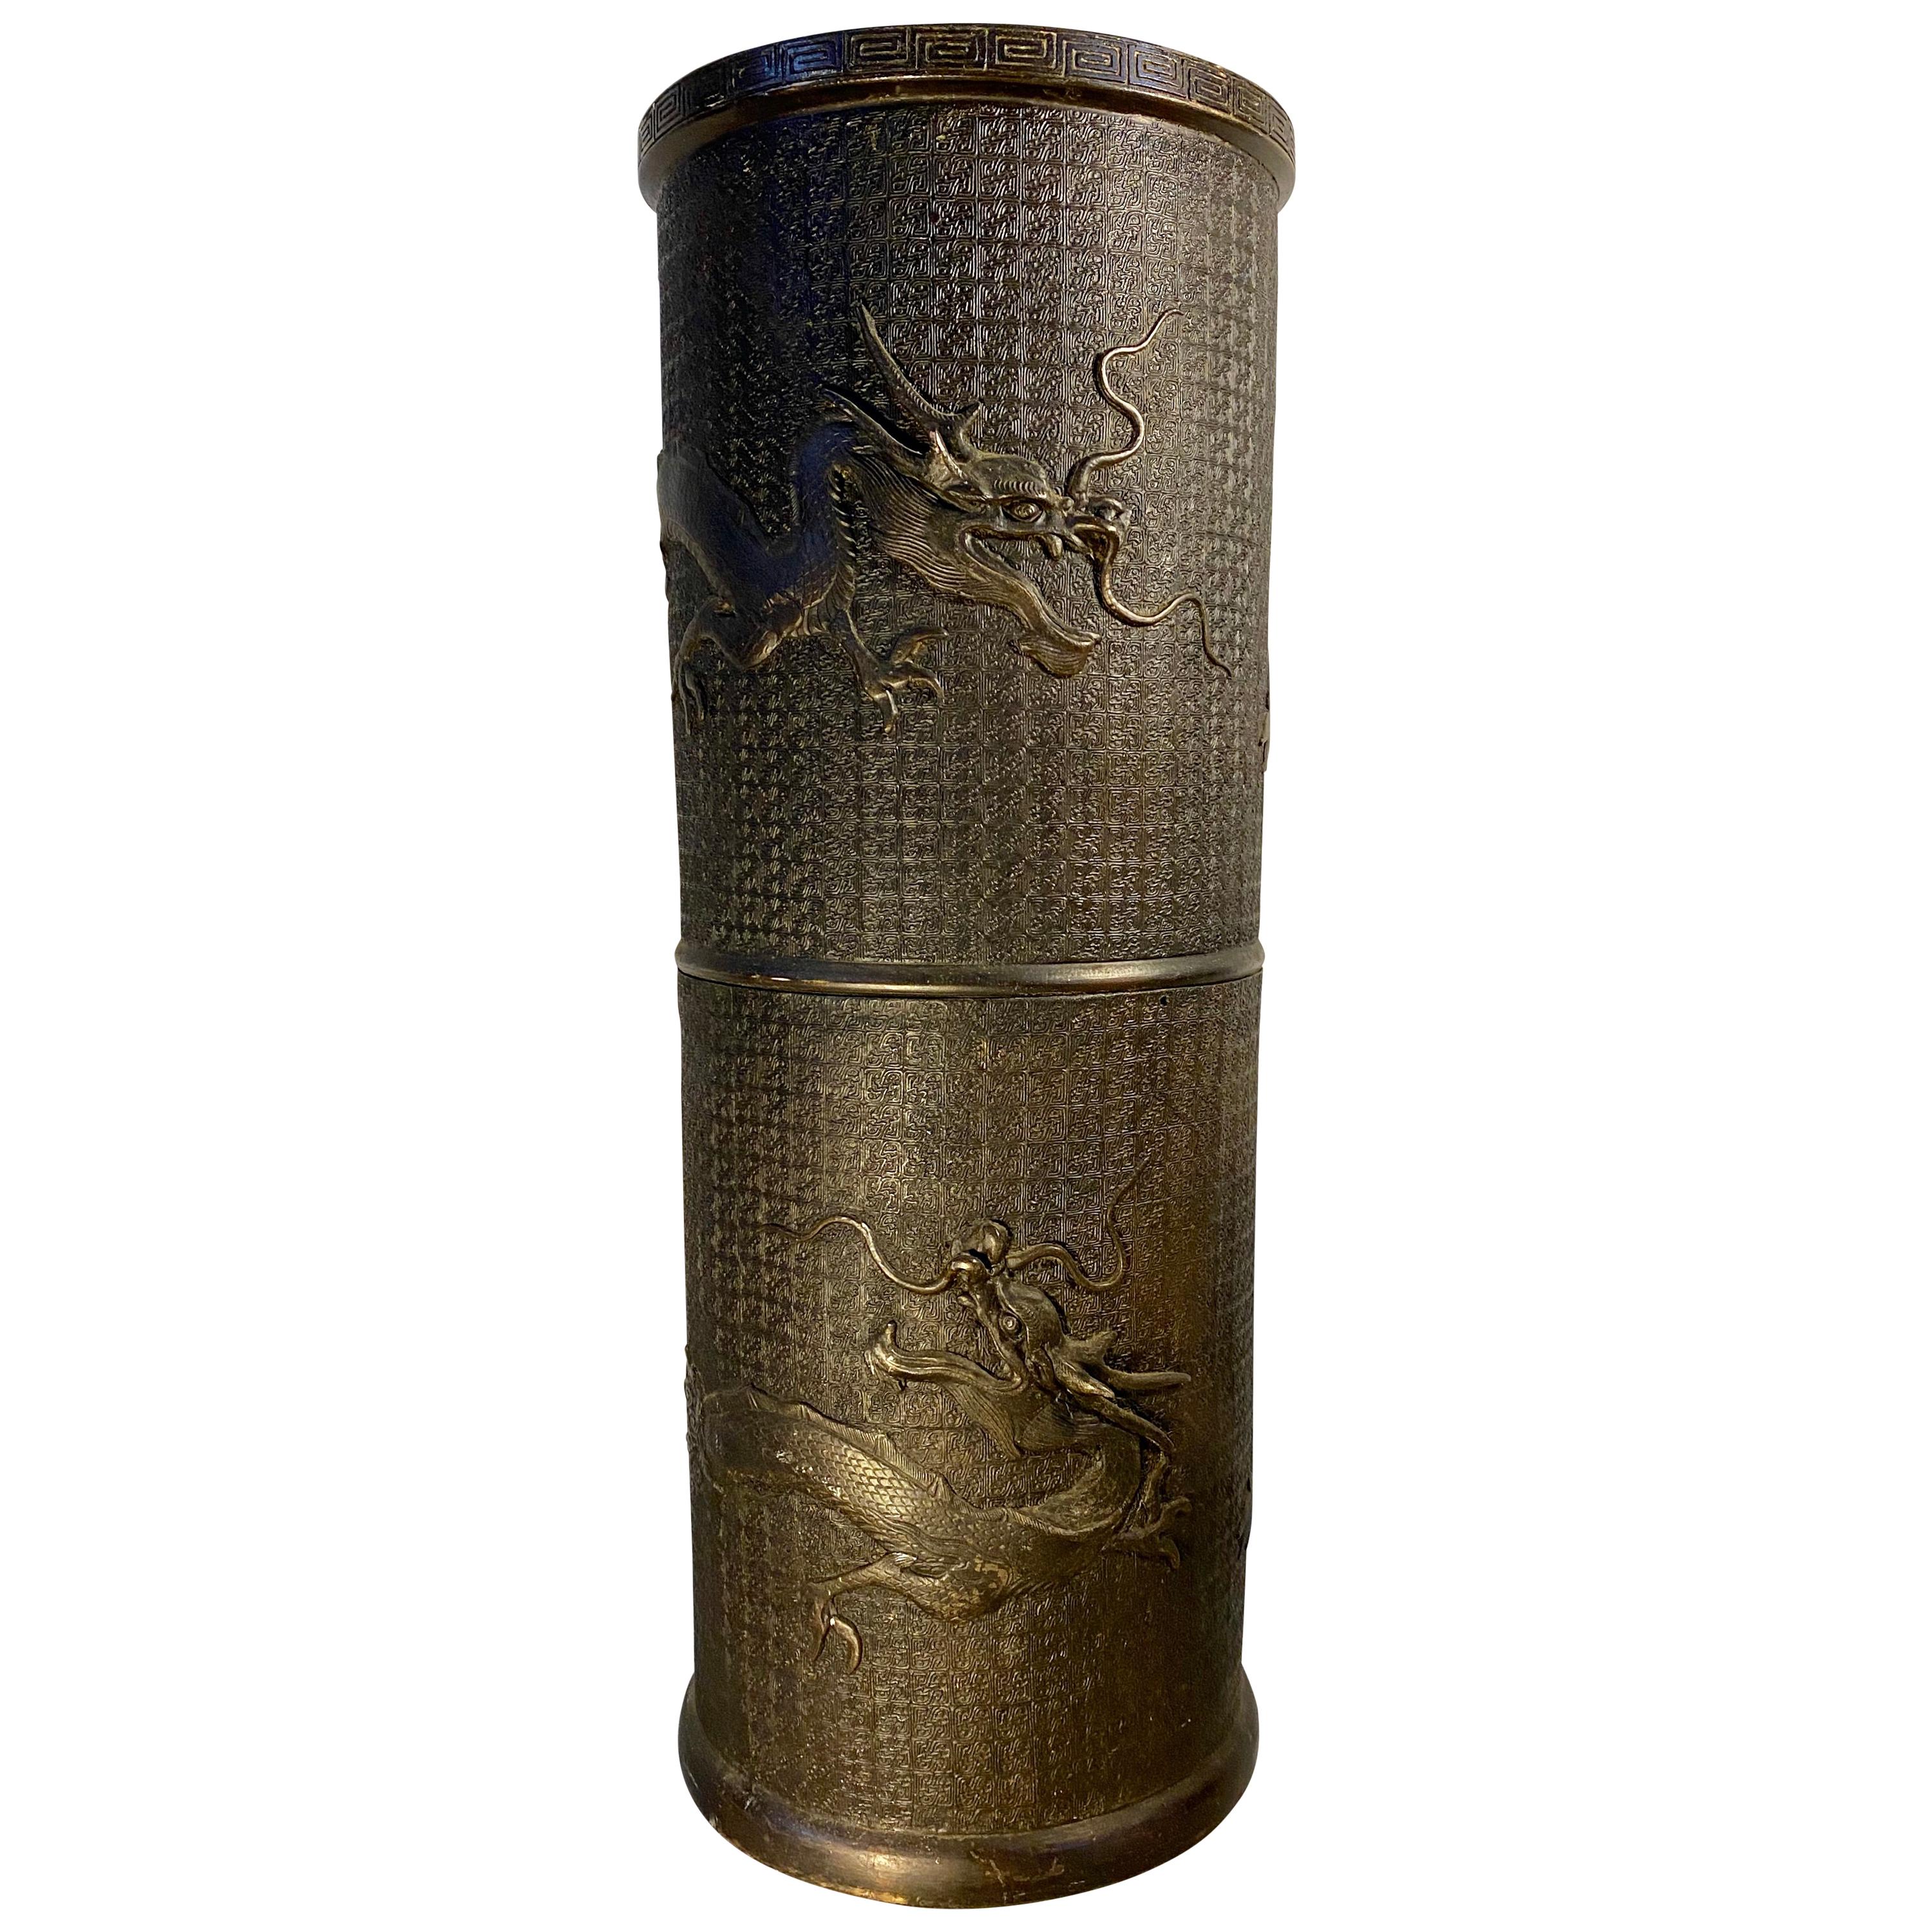 Antique Cast Bronze Japanese Umbrella / Cane Stand with Dragon Motif